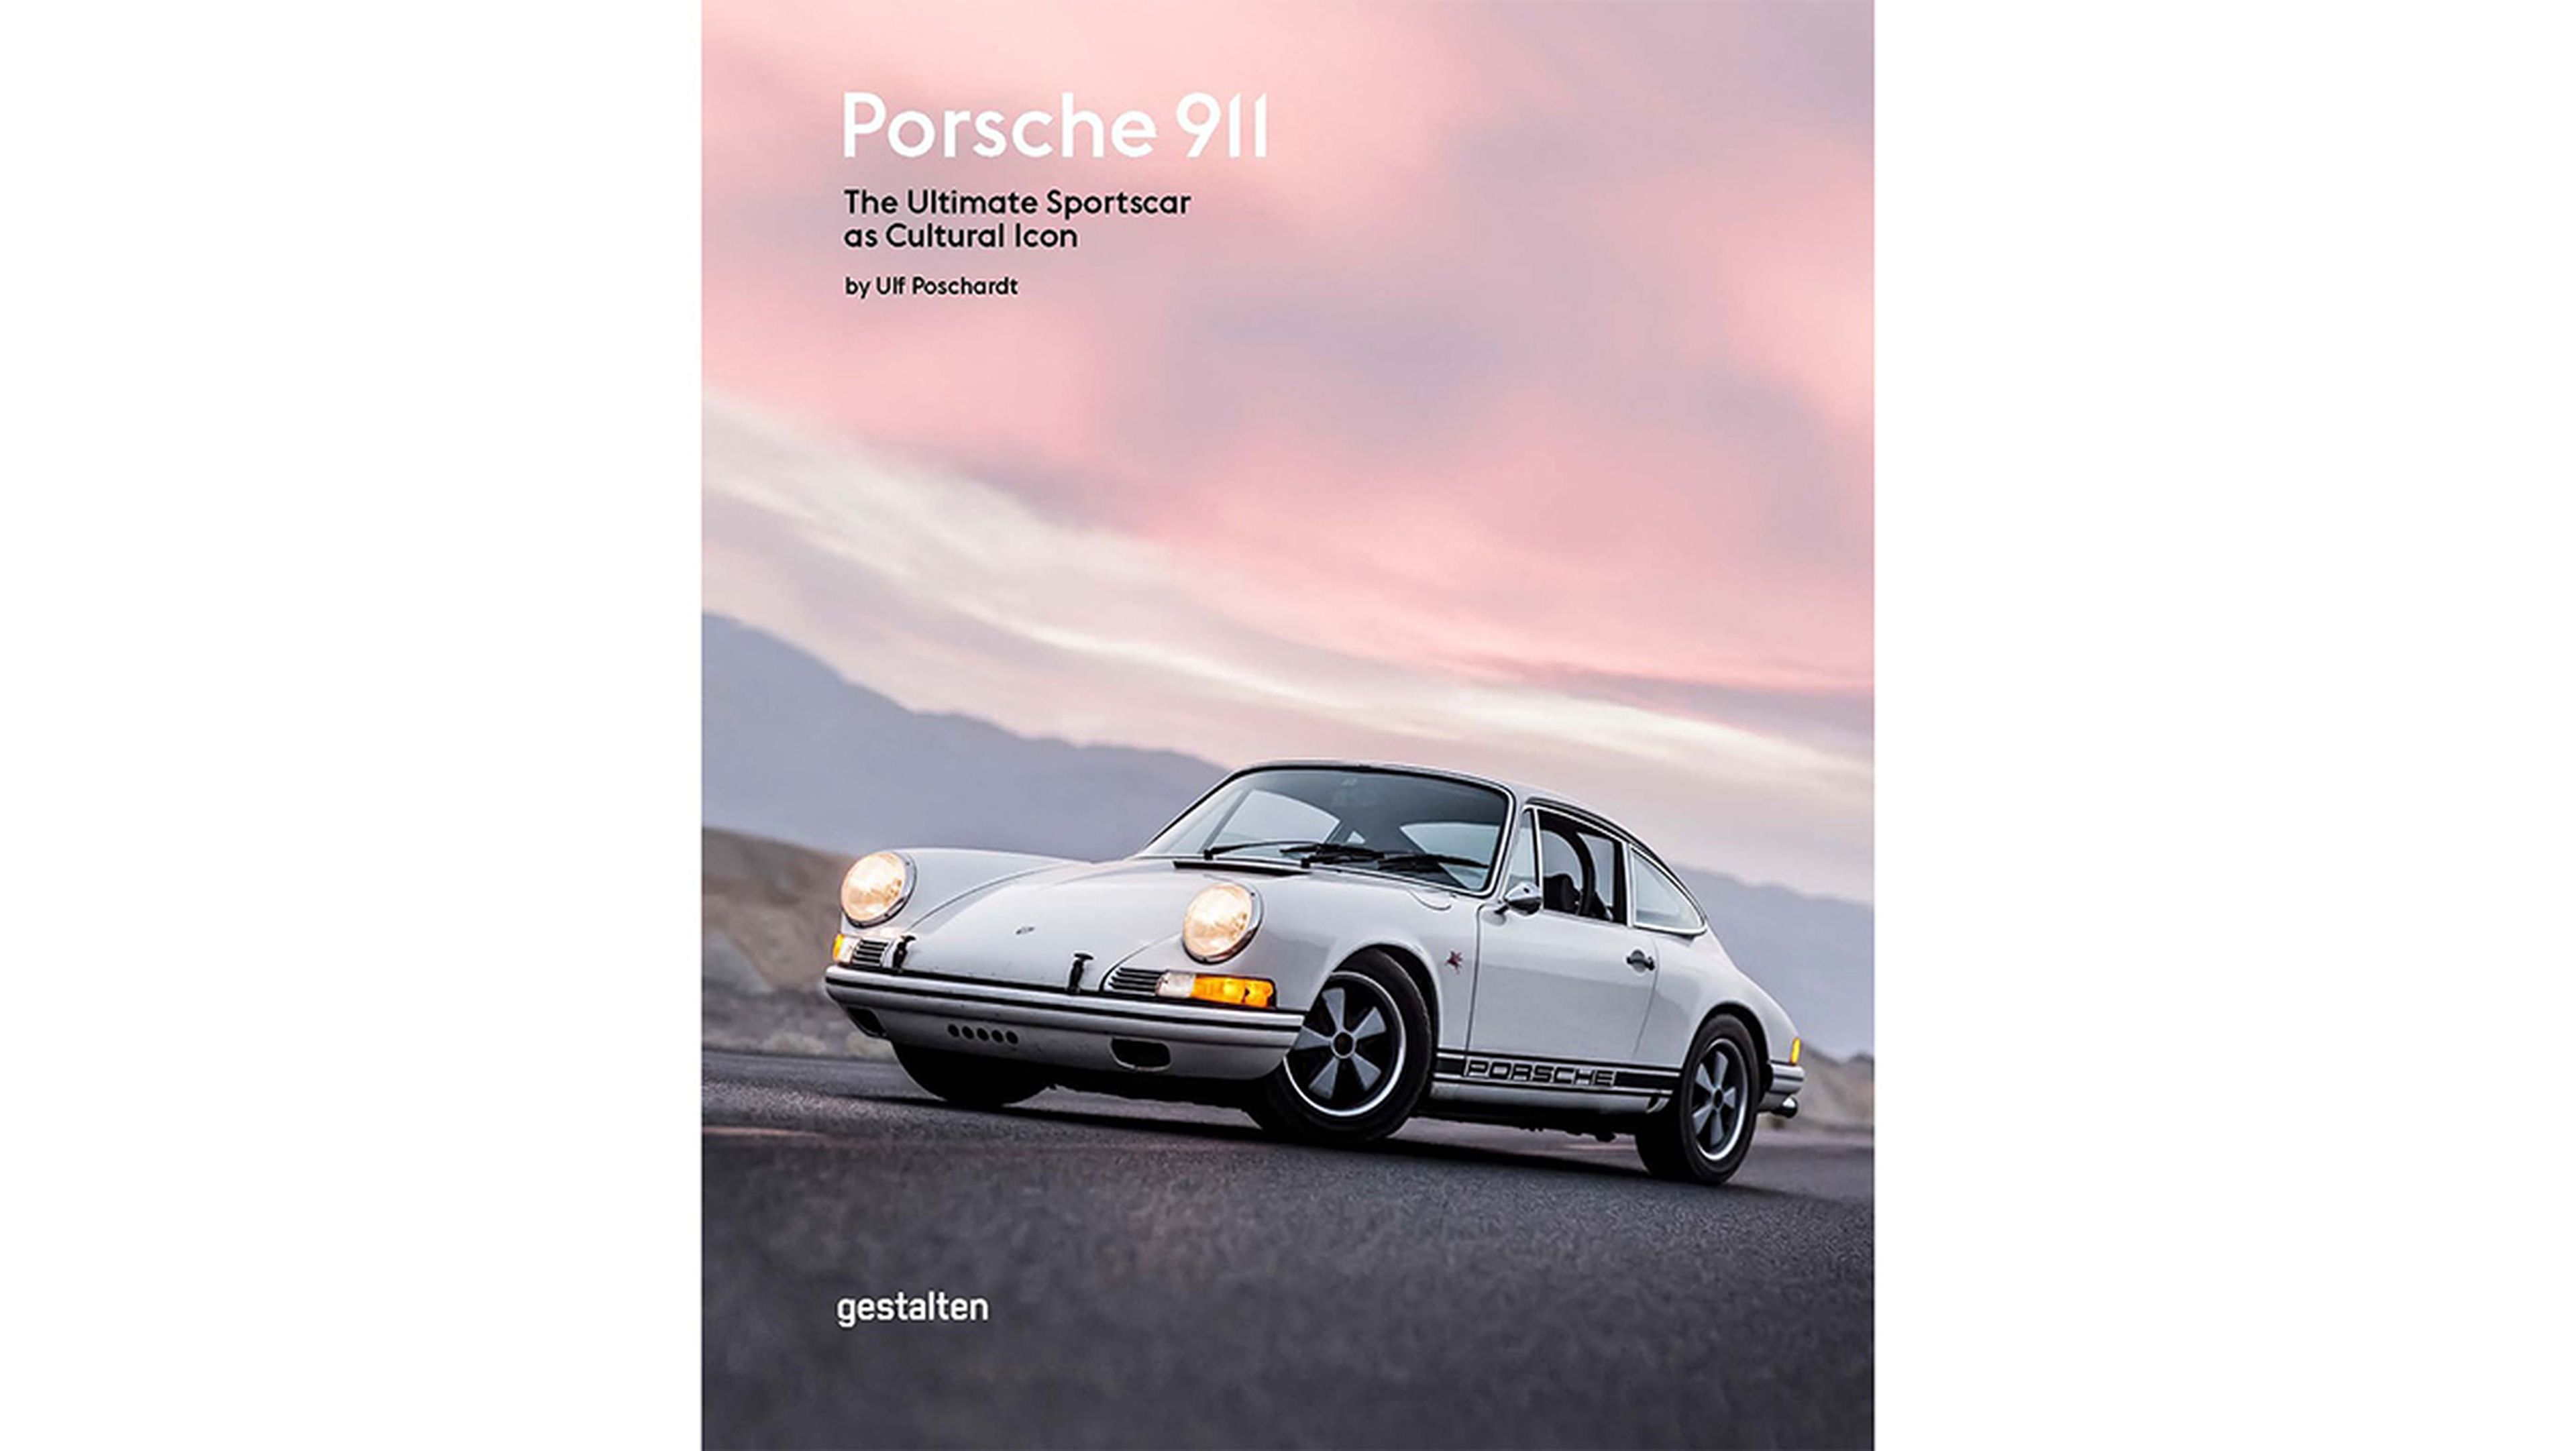 Los 10 mejores regalos para fanáticos de Porsche - Libro Porsche 911: the ultimate sports car as cultural icon